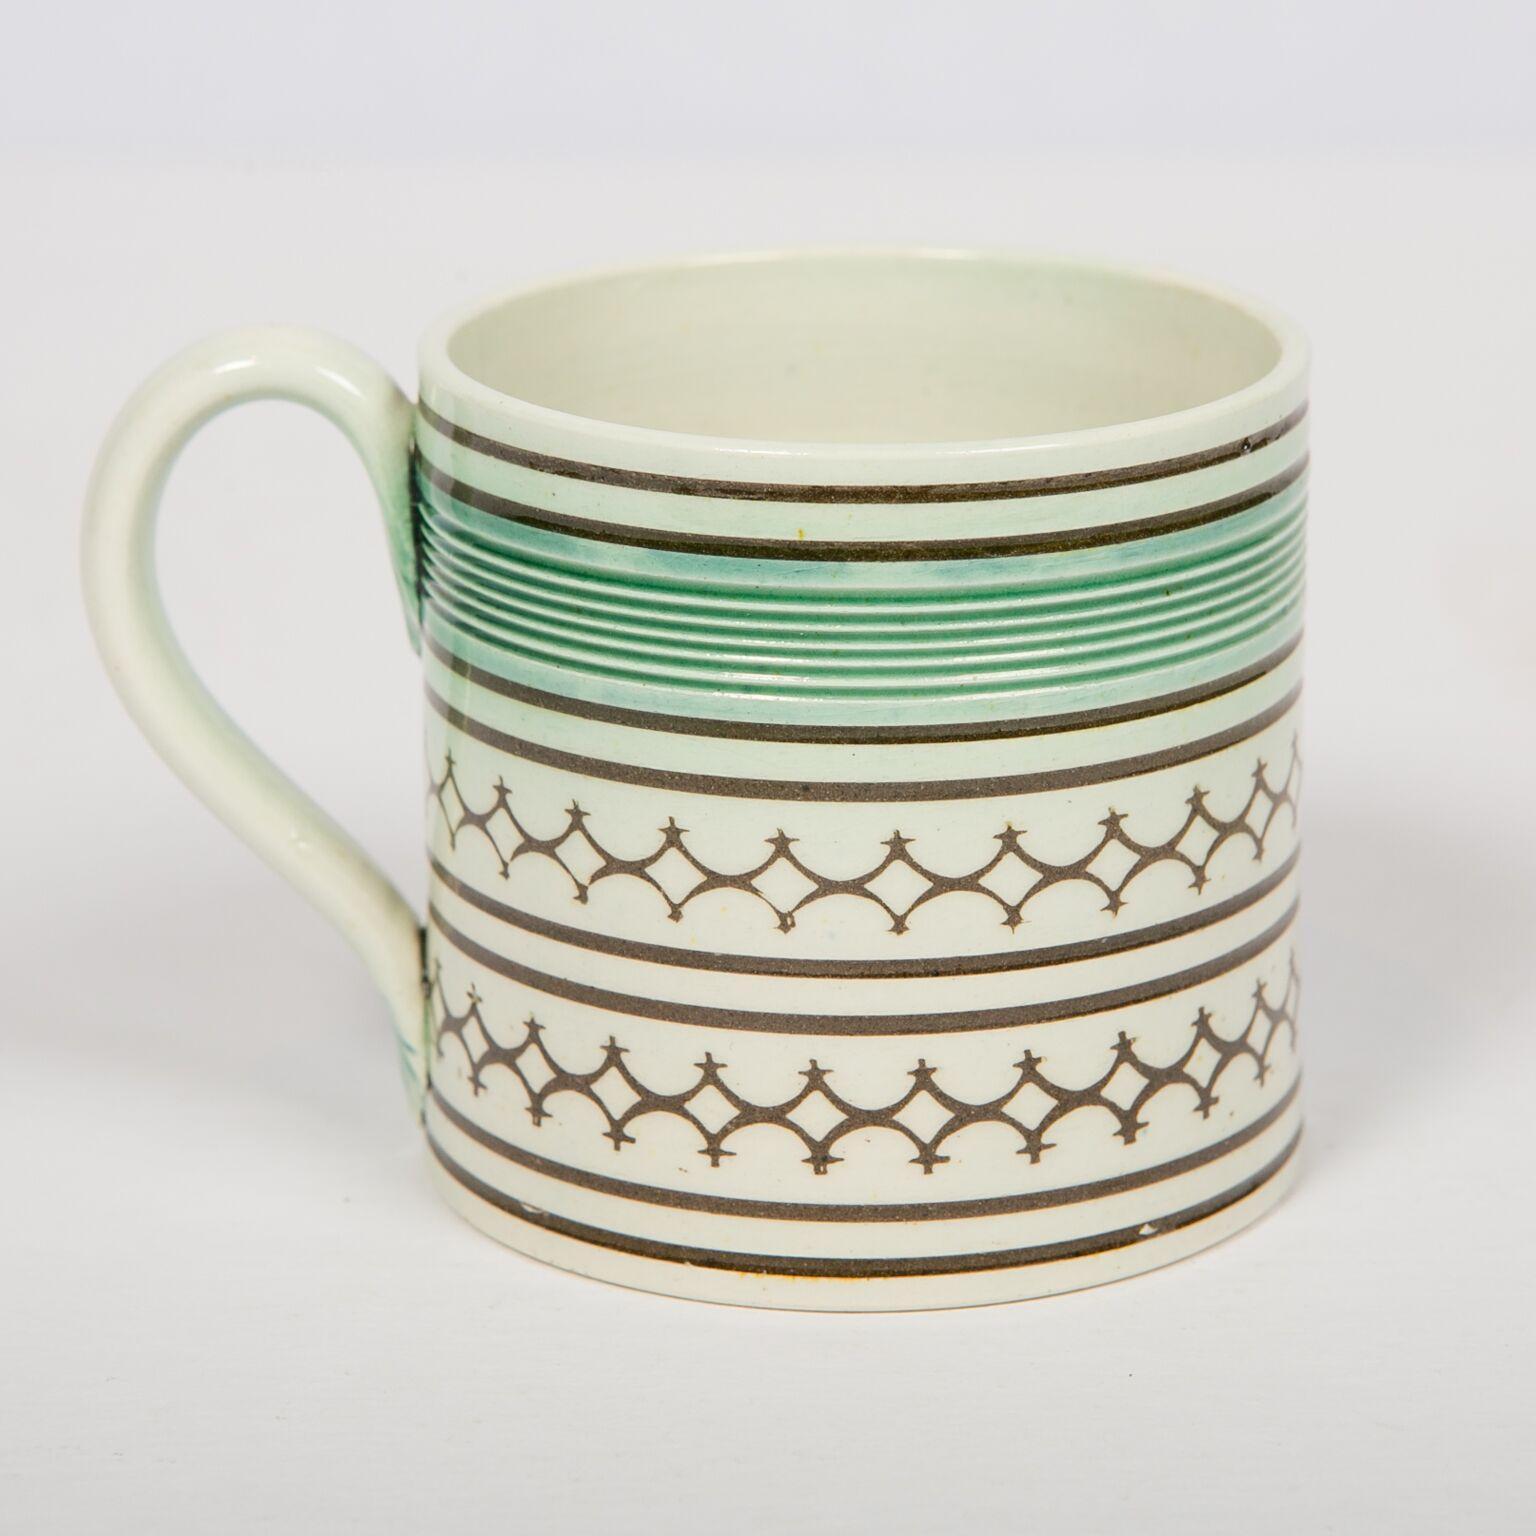 English Small Mochaware Mug England, circa 1820